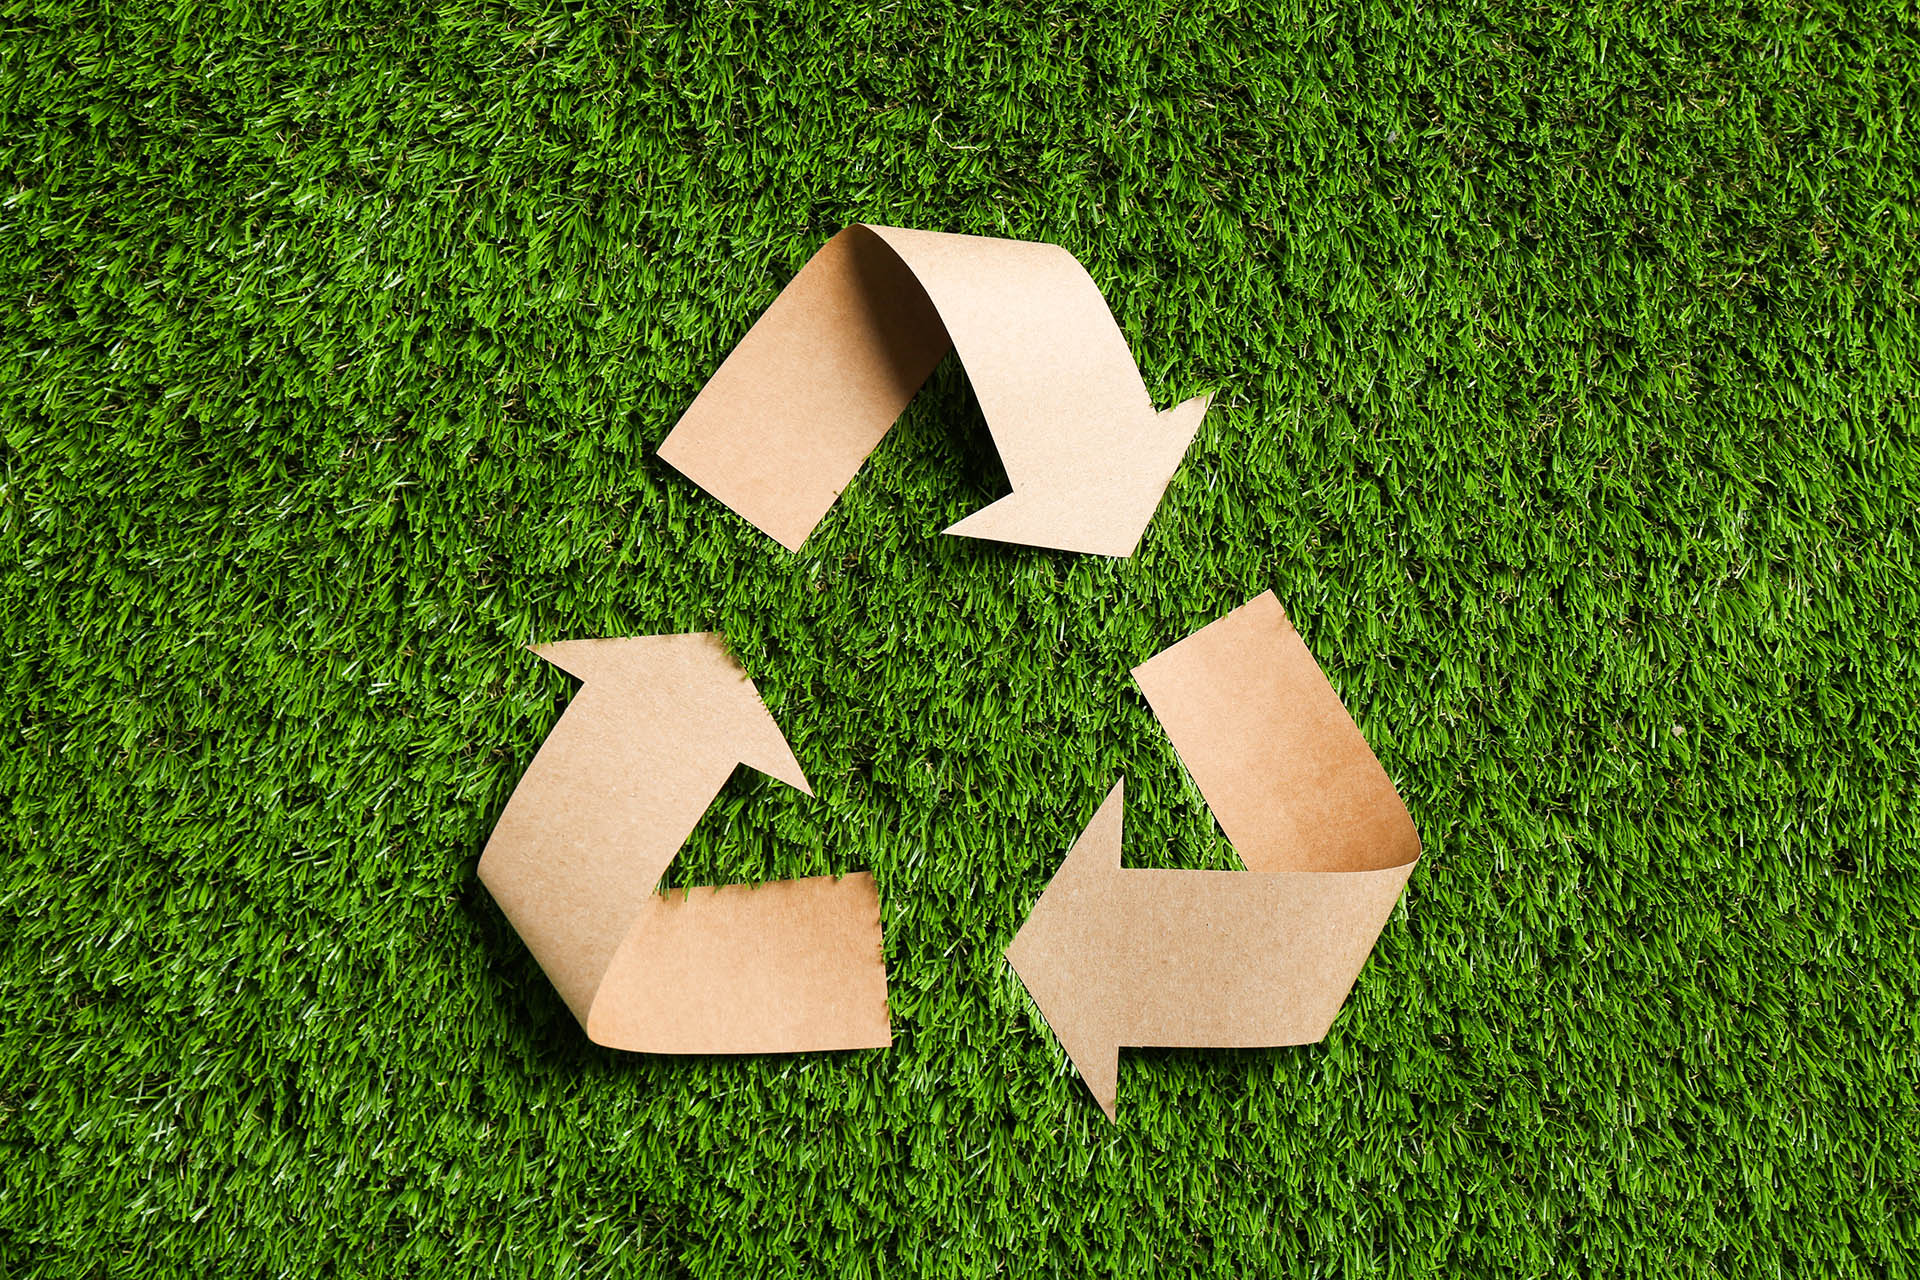 Recyclingsymbol Germania Inkasso in Entsorgungsbranche